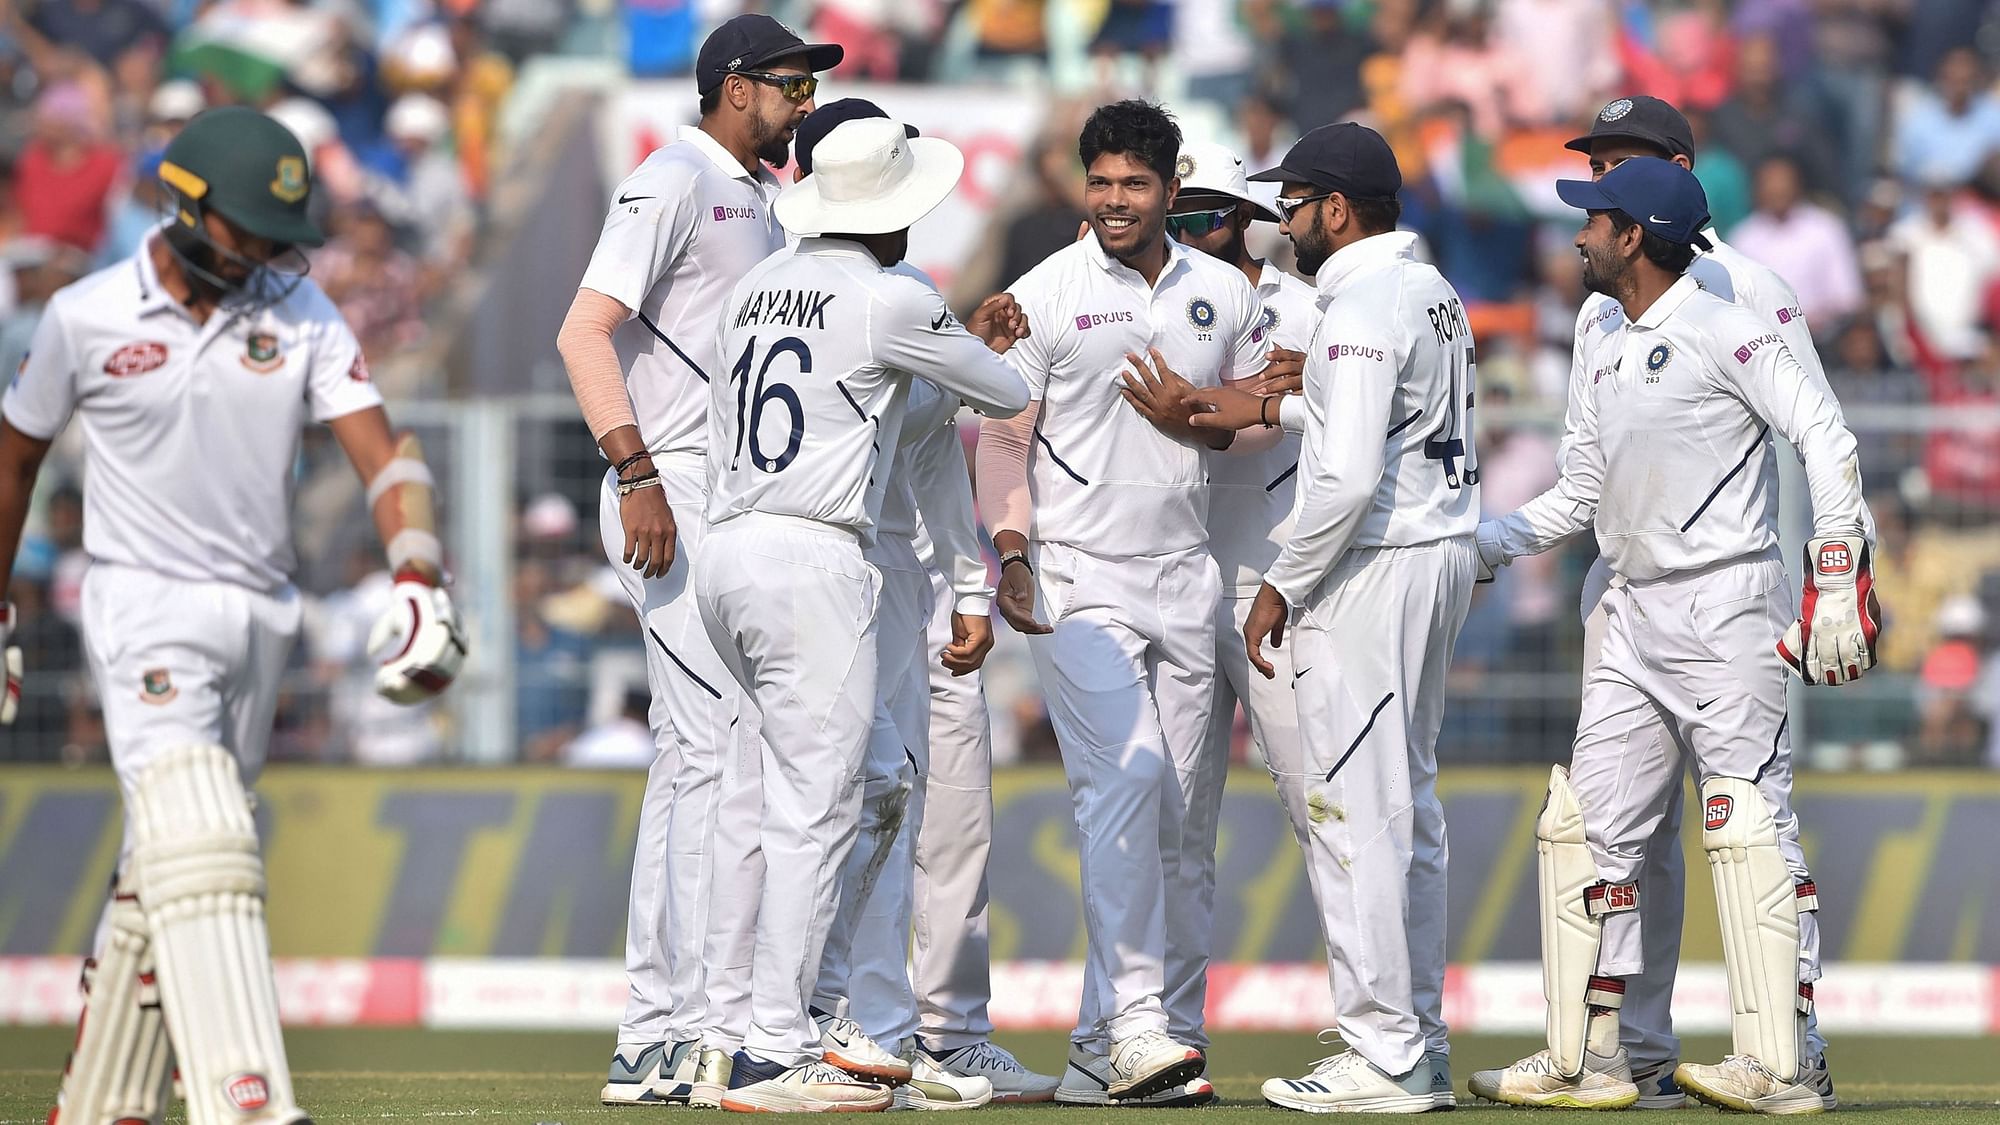 India played their maiden pink-ball Test against Bangladesh at Kolkata’s Eden Gardens in November last year.